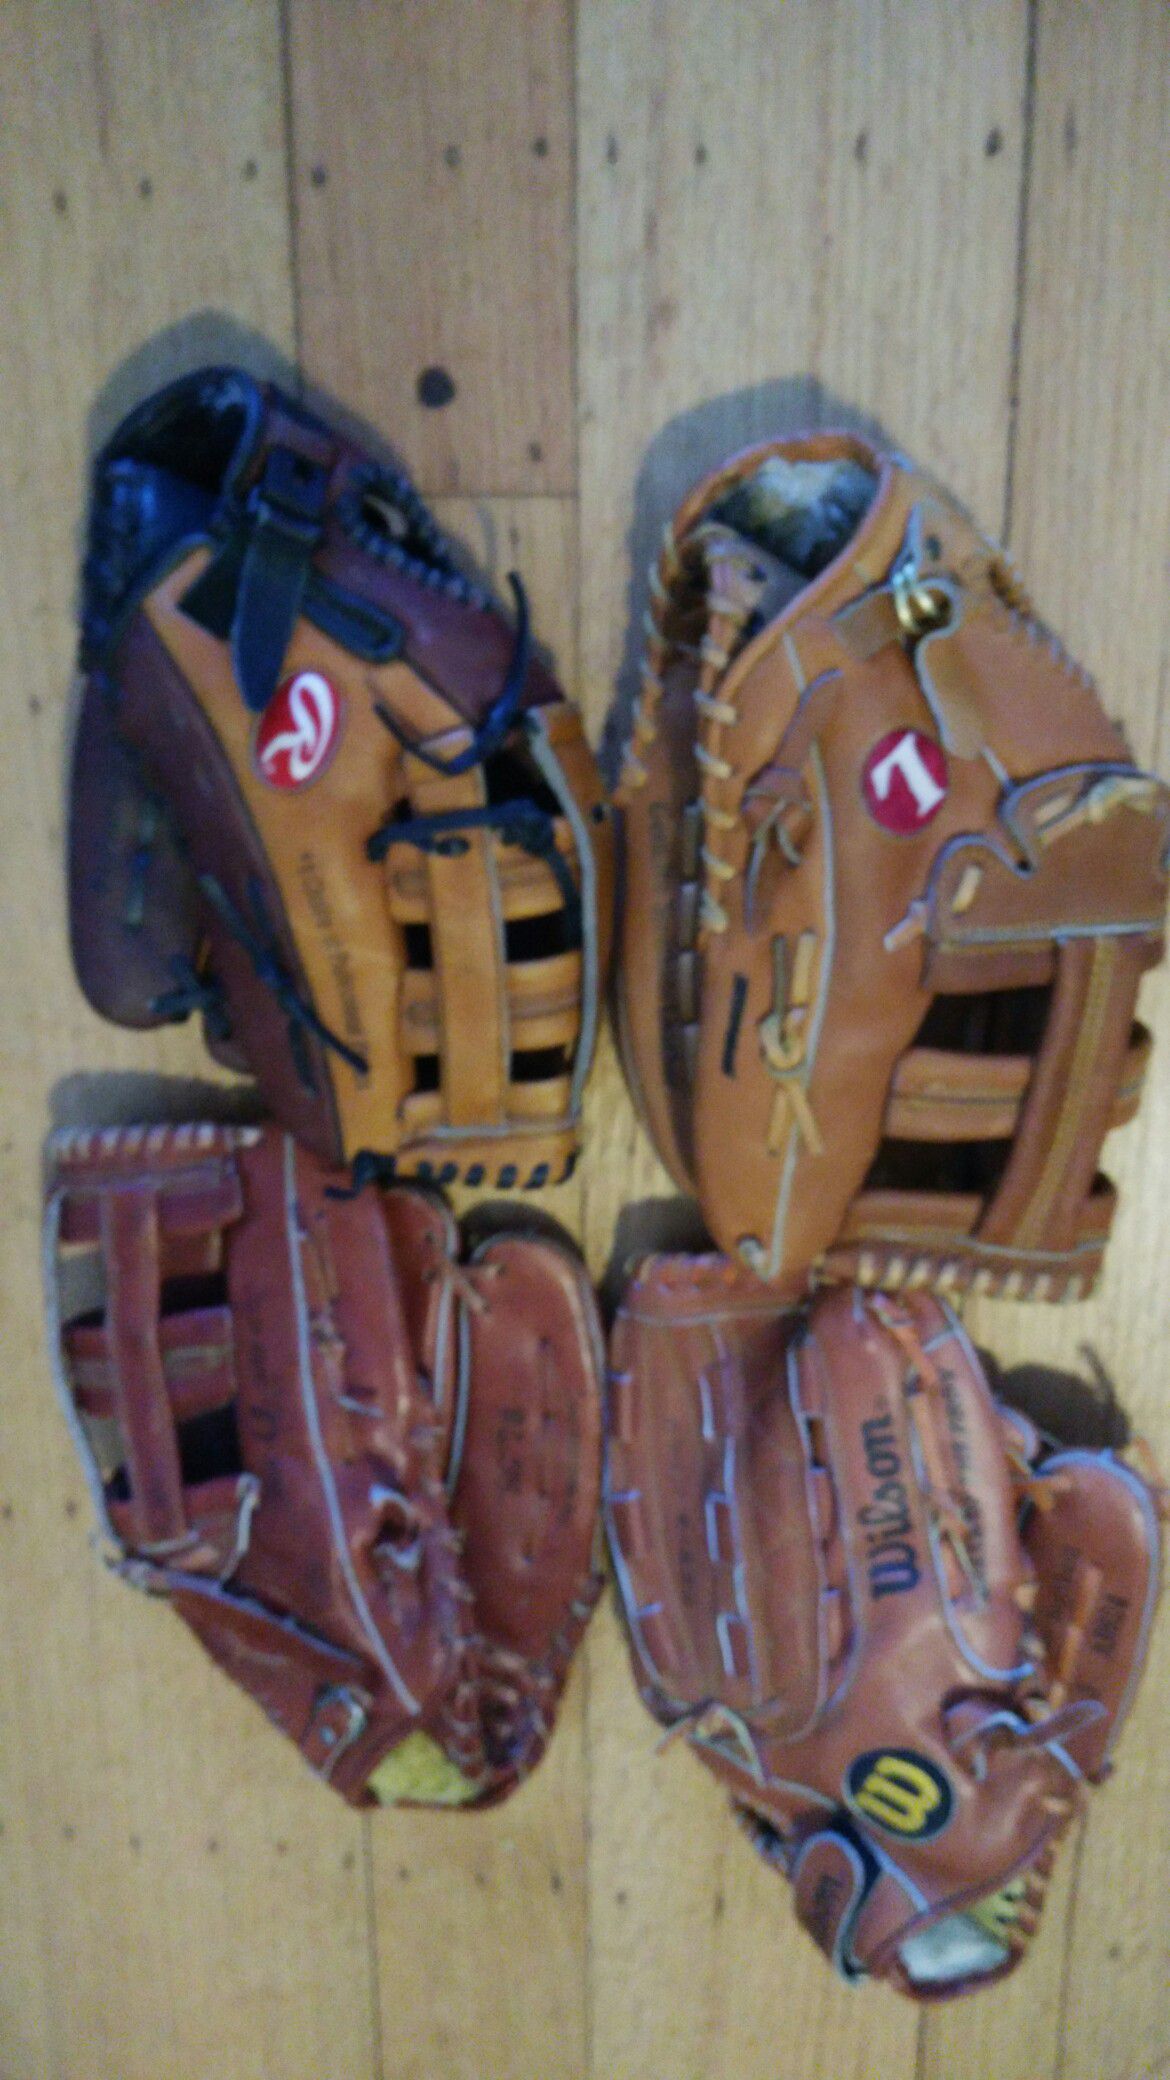 $30 each Slowpitch softball glove baseball mitt